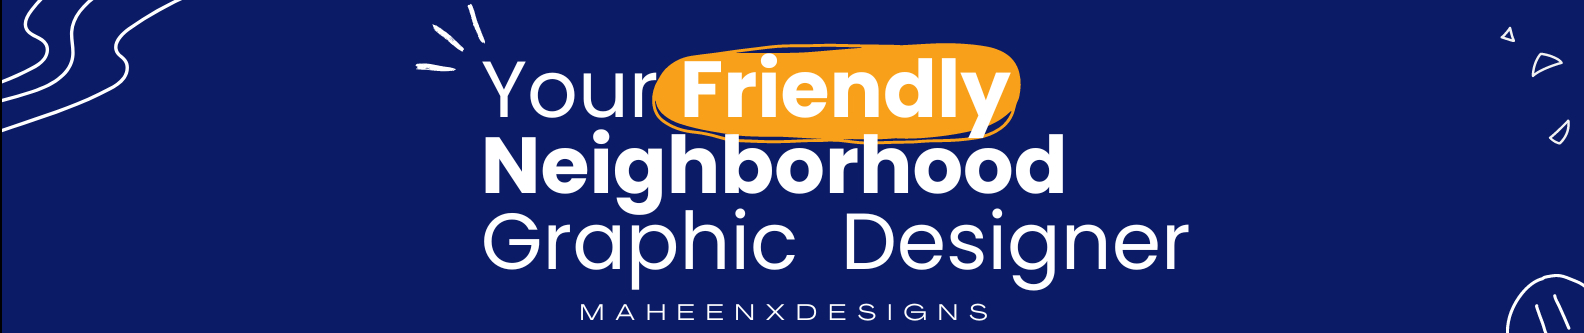 MAHEEN X DESIGNS's profile banner